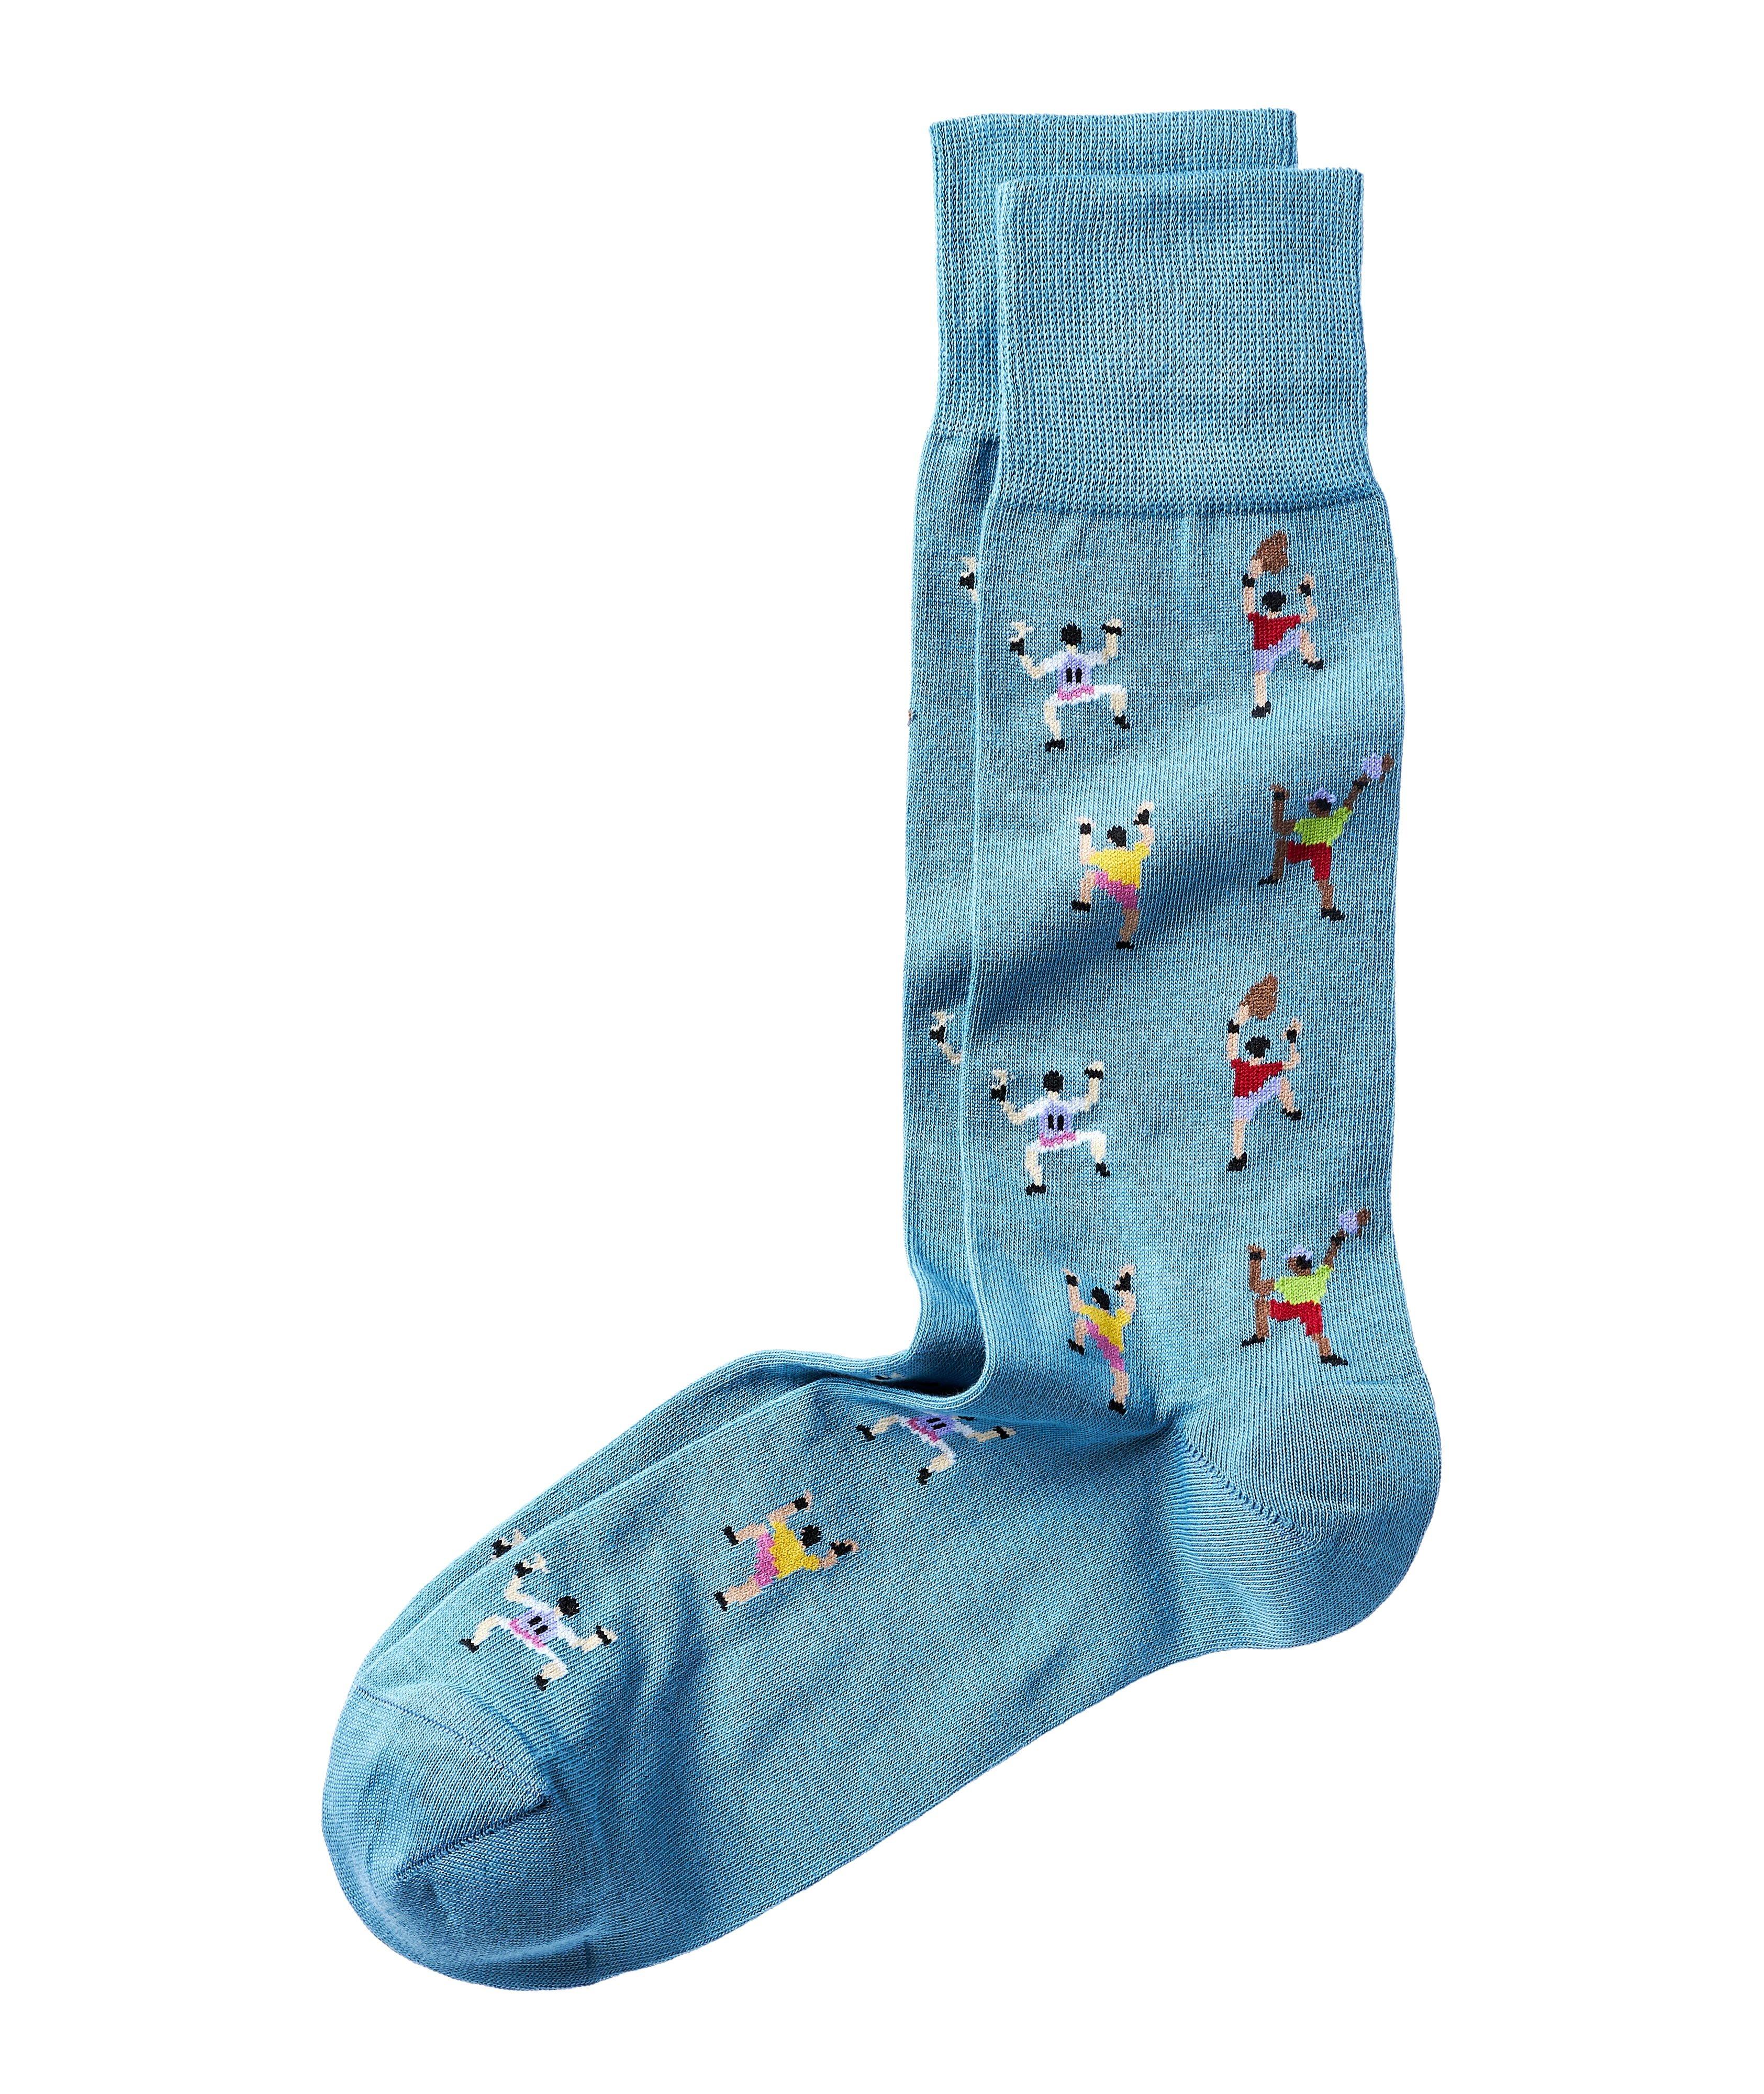 Printed Cotton-Blend Socks image 0